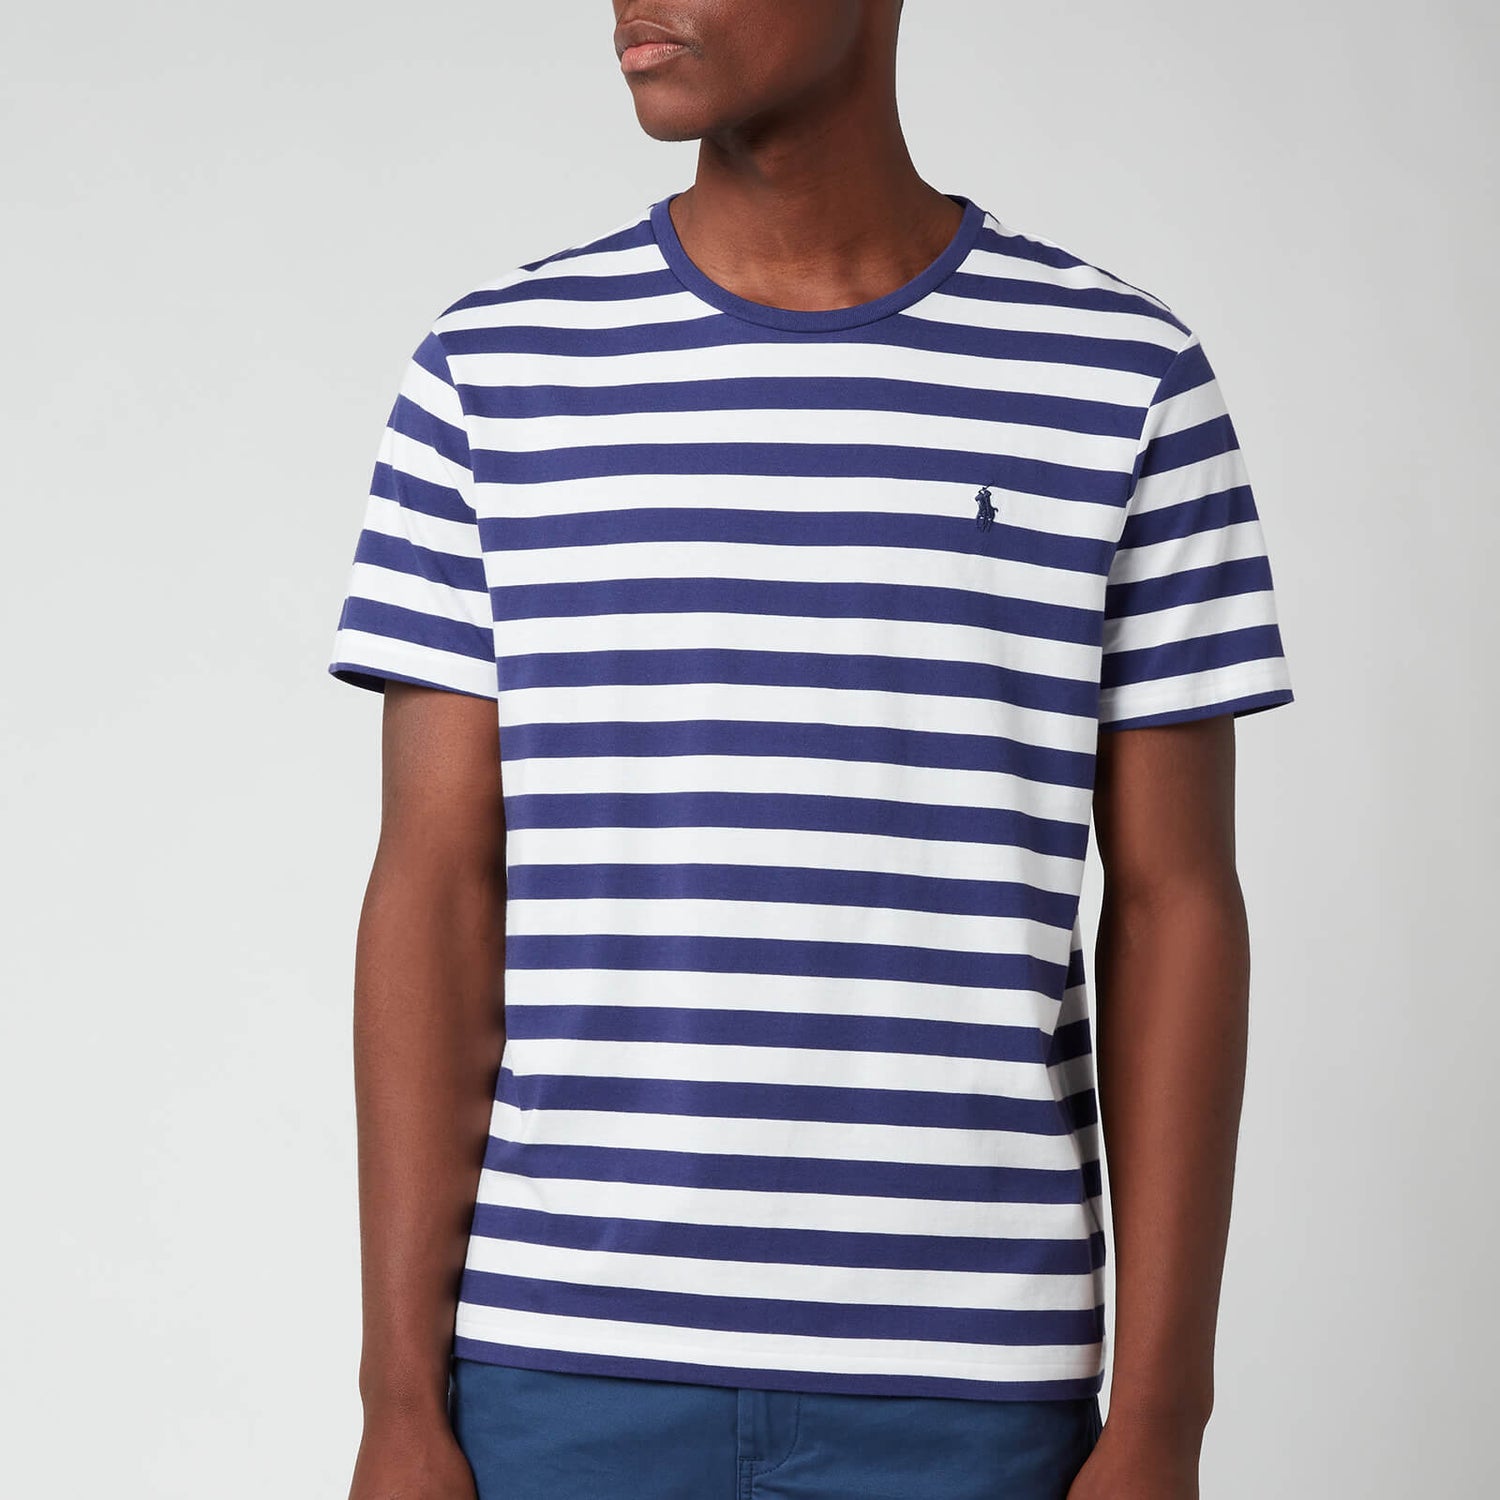 Polo Ralph Lauren Men's Jersey Stripe T-Shirt - Boathouse Navy/White